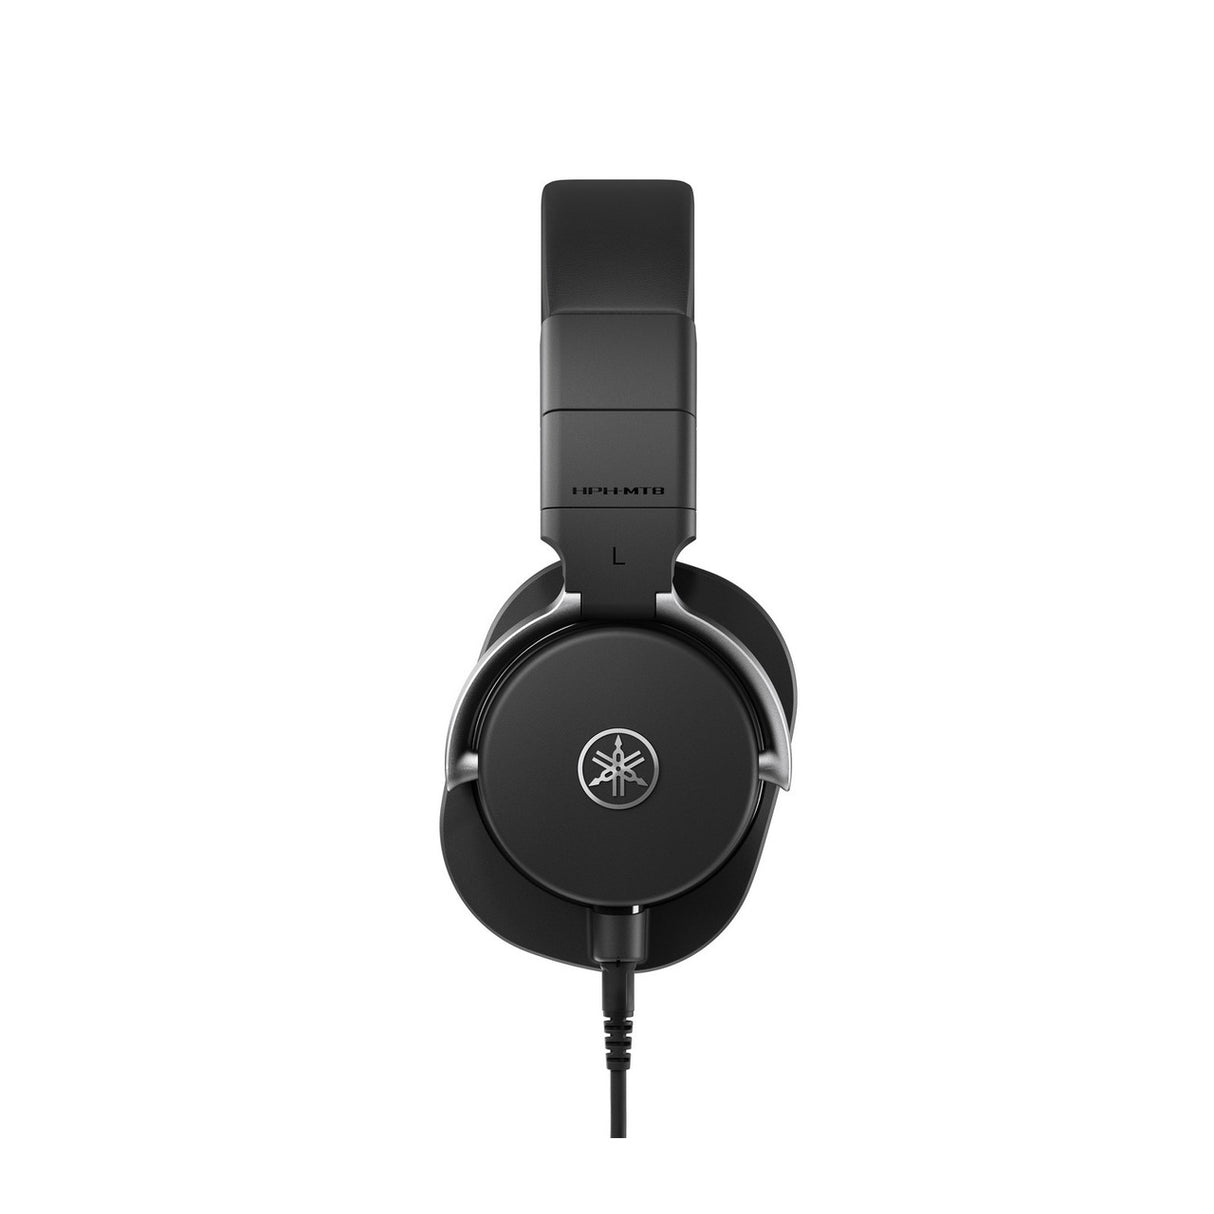 Yamaha HPH-MT8 | Over Ear Closed Back Studio Monitor Headphones Black